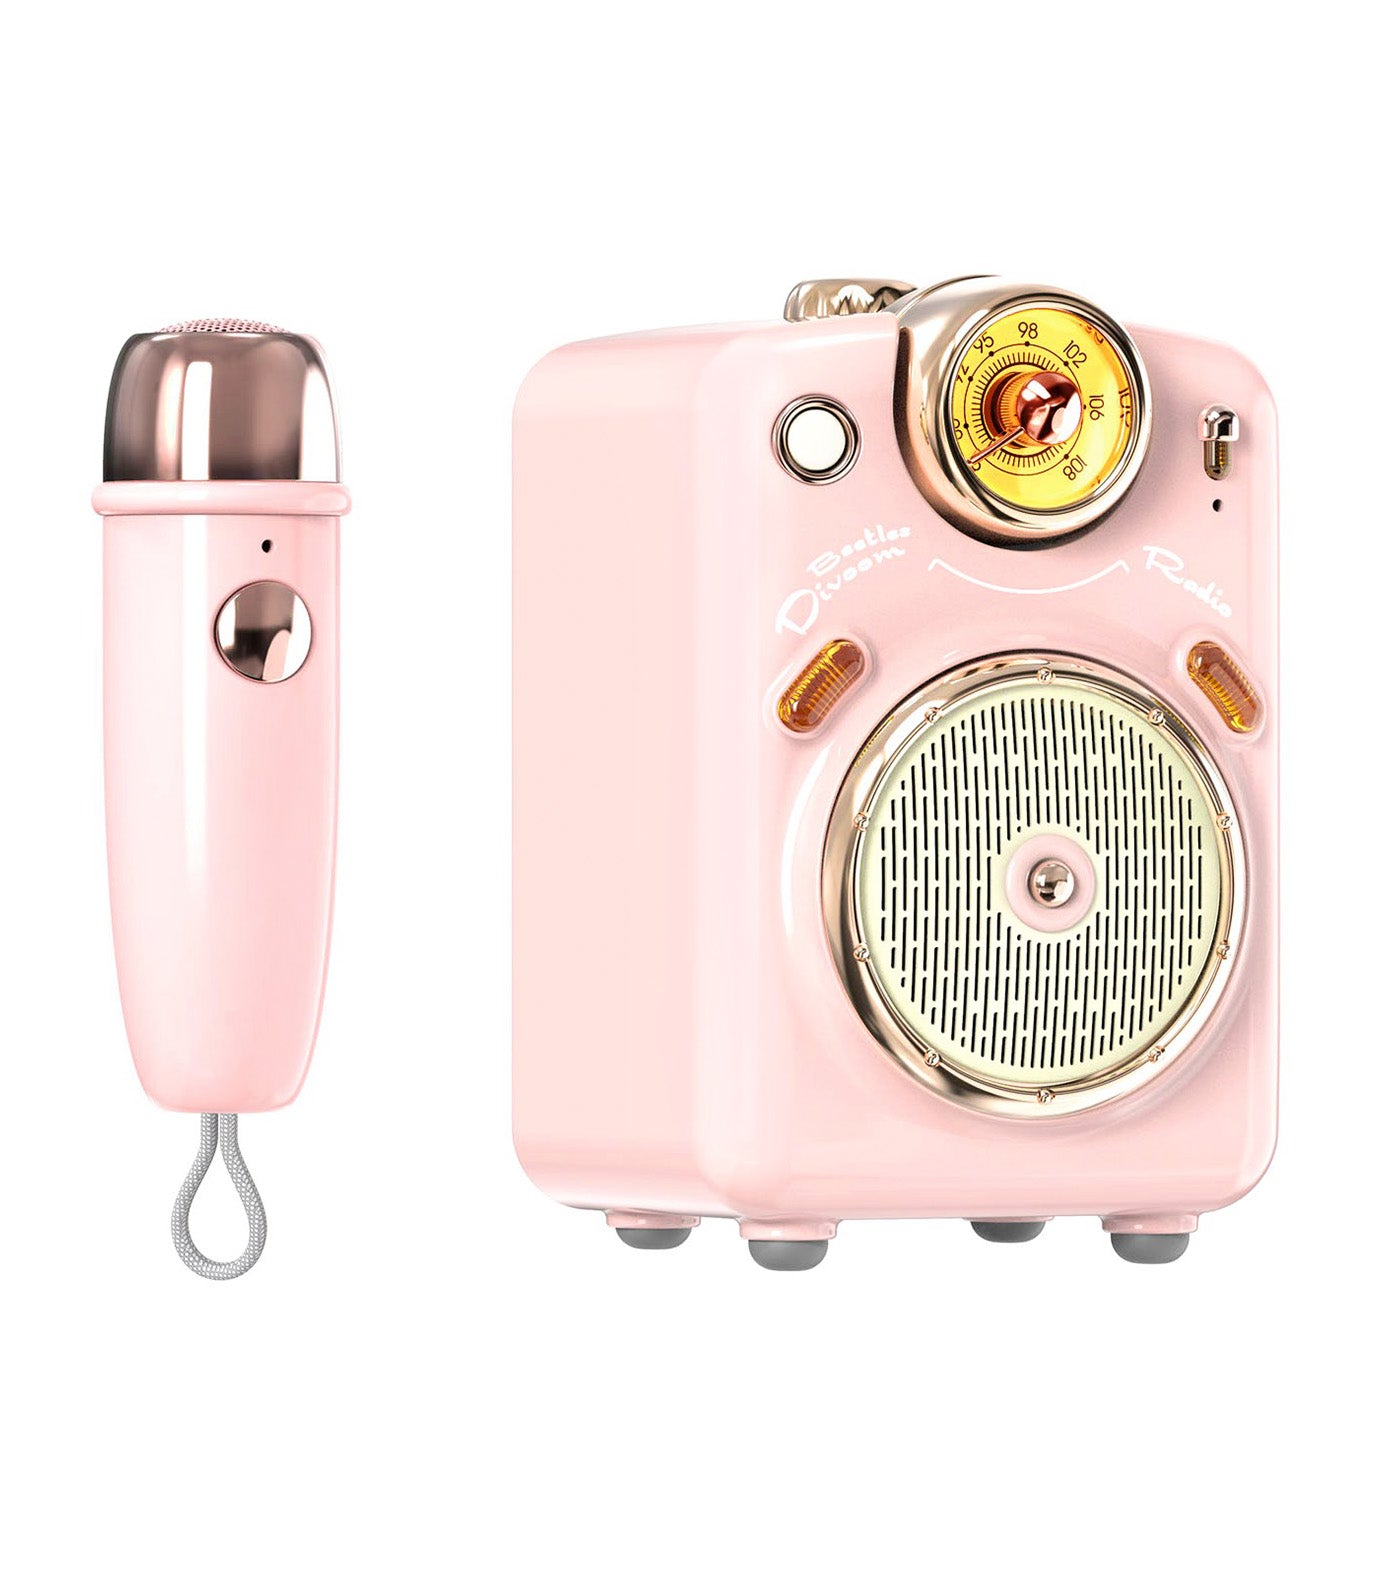 Fairy-OK Petite Karaoke Set Pink